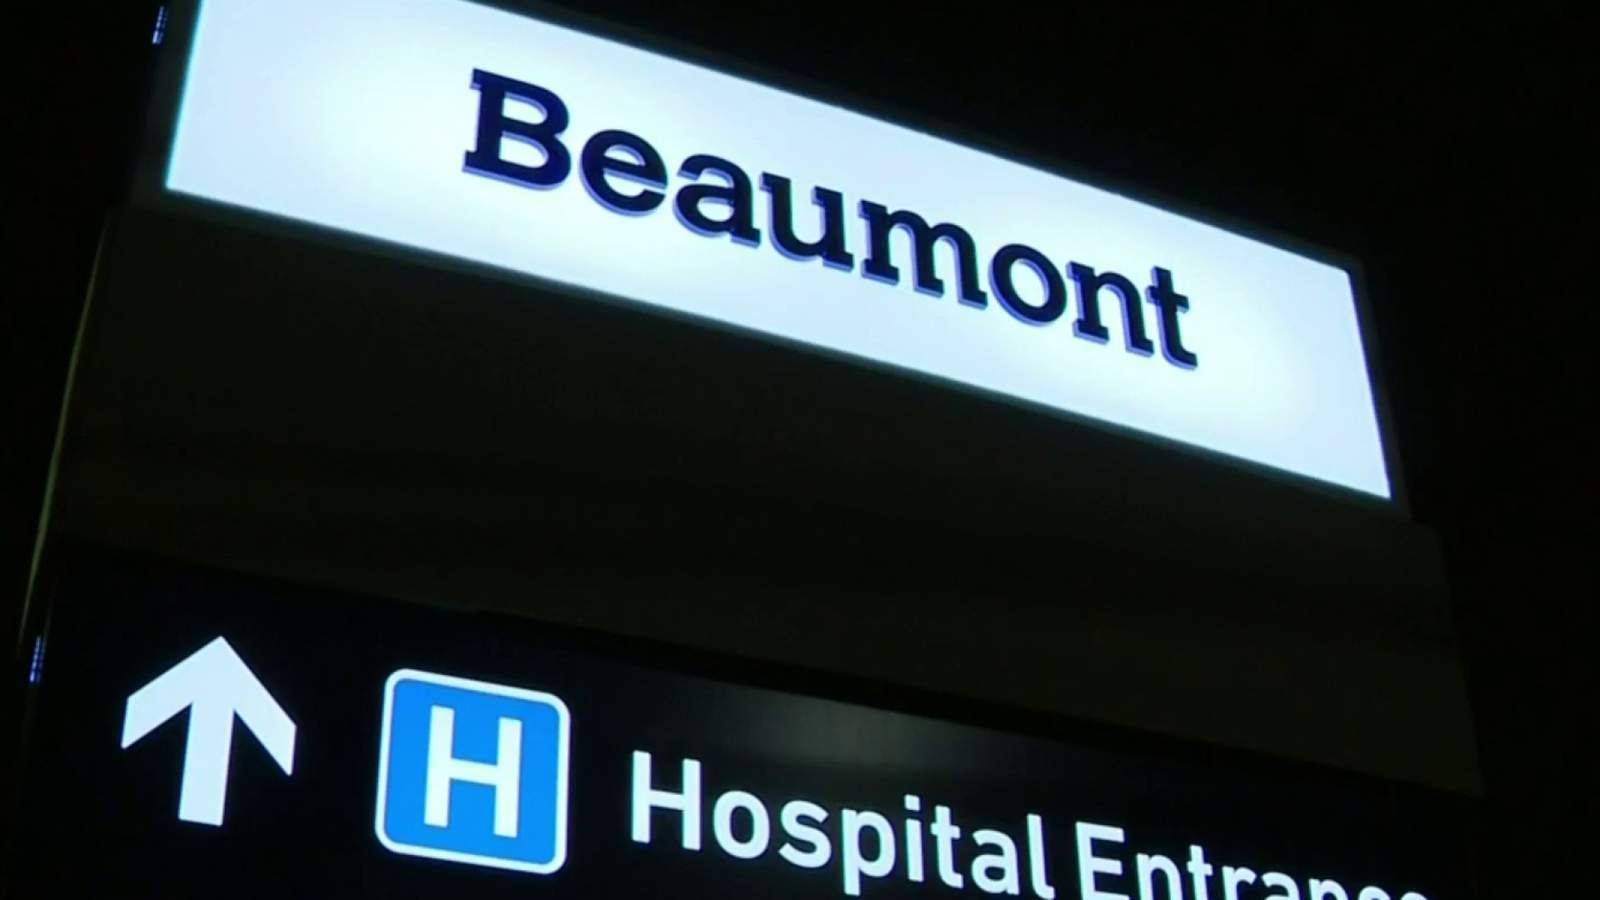 Beaumont Wayne Hospital temporarily closes after discharging, transferring coronavirus (COVID-19) patients